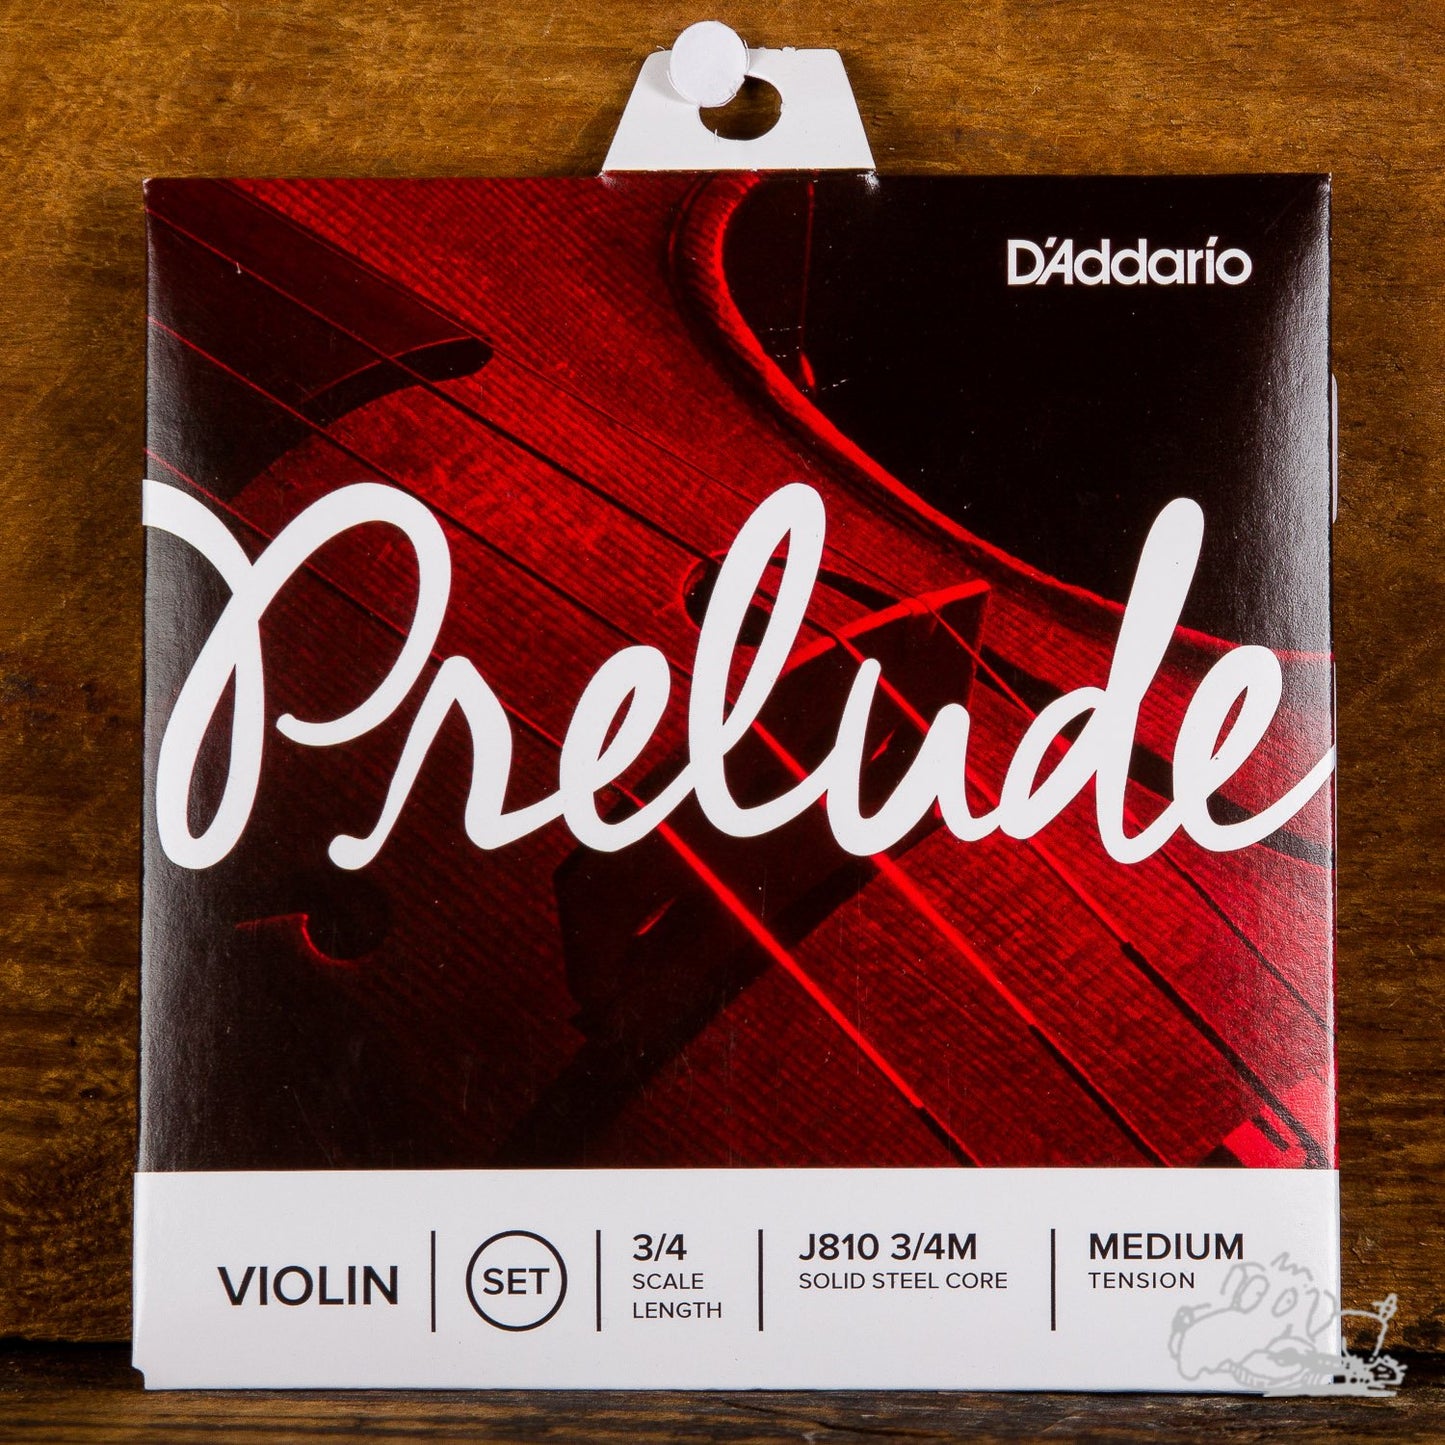 D'Addario Prelude Violin Strings 3/4 Scale Length Solid Steel Core